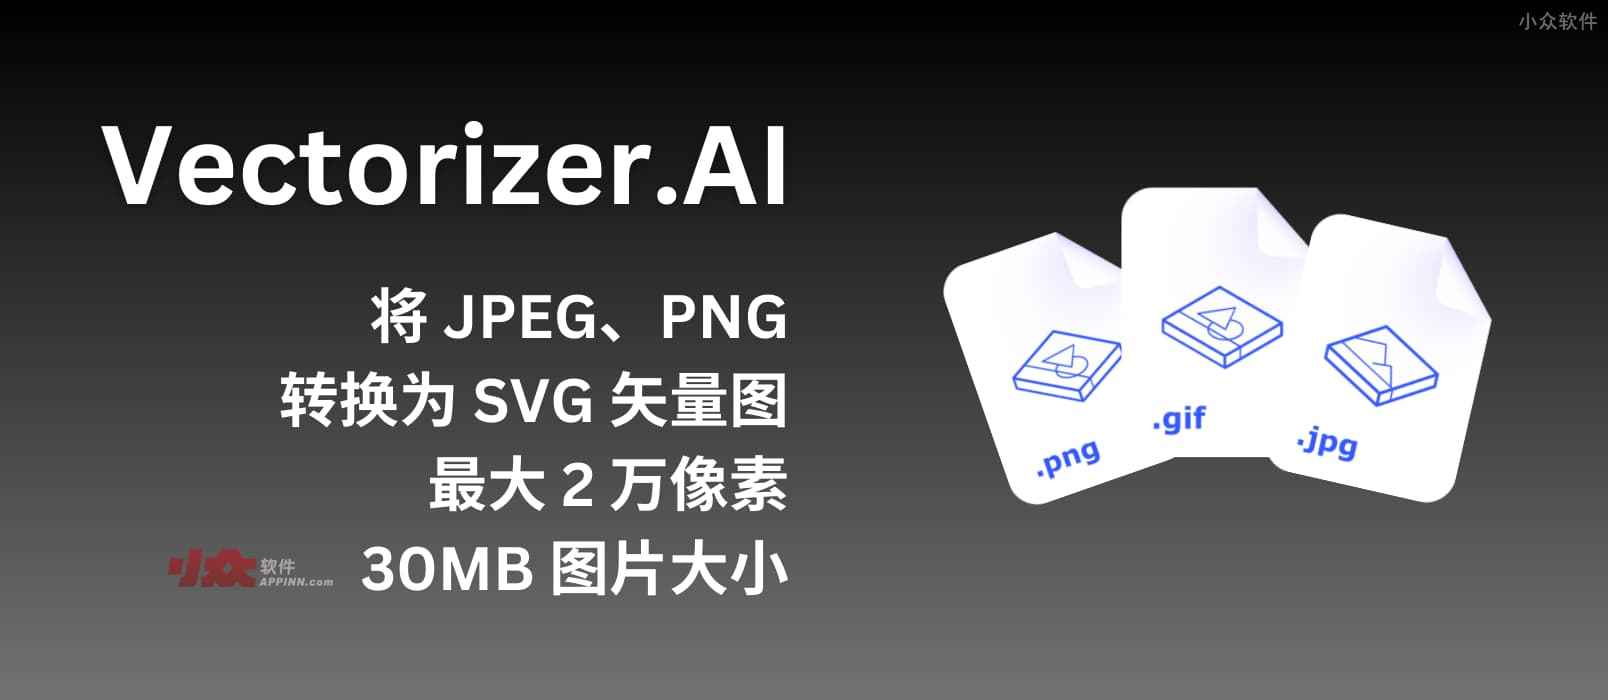 Vectorizer.AI – 免费将 JPEG 和 PNG 位图转换为 SVG 矢量图，可无限放大。支持最大 2 万像素-综合交流论坛-交流-小北视界